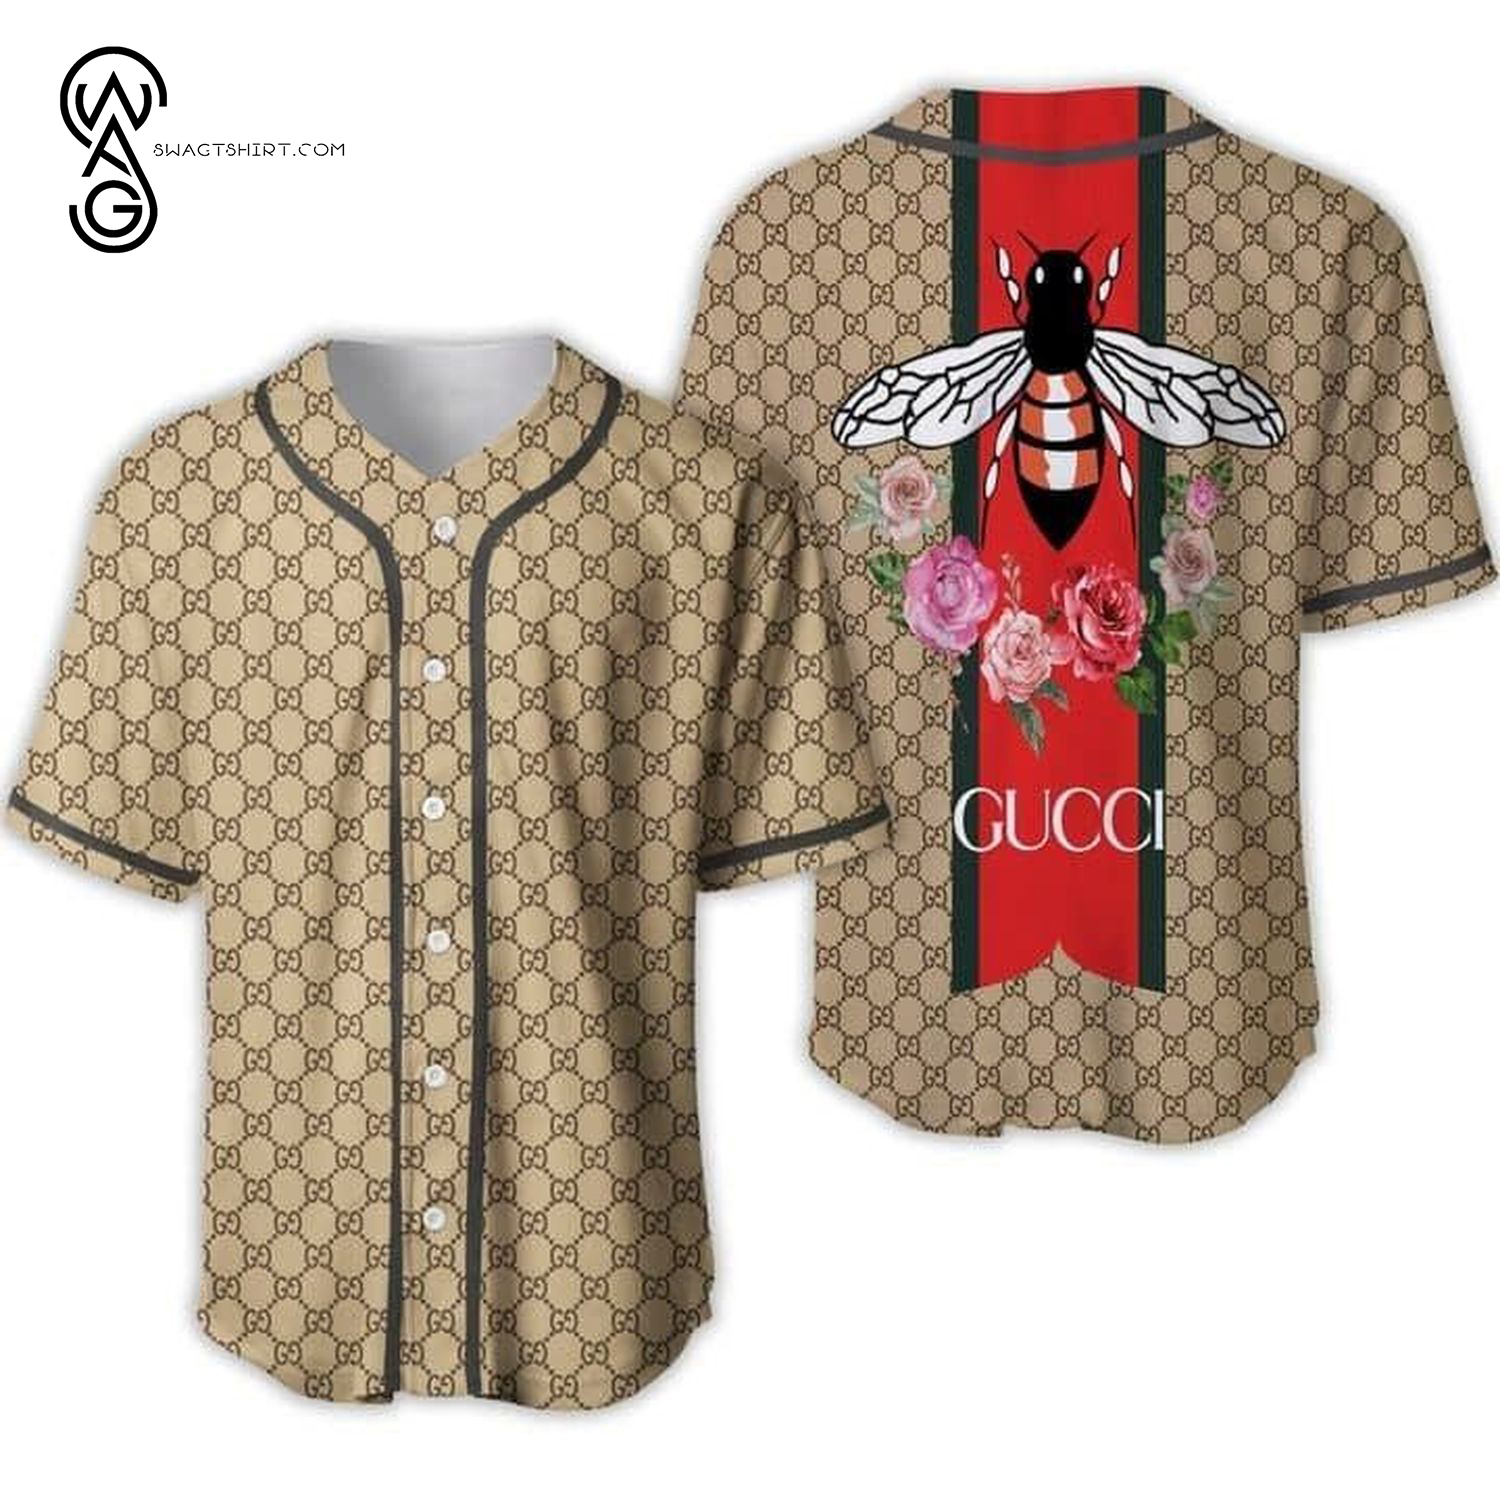 Gucci Bee Full Printed Baseball Jersey